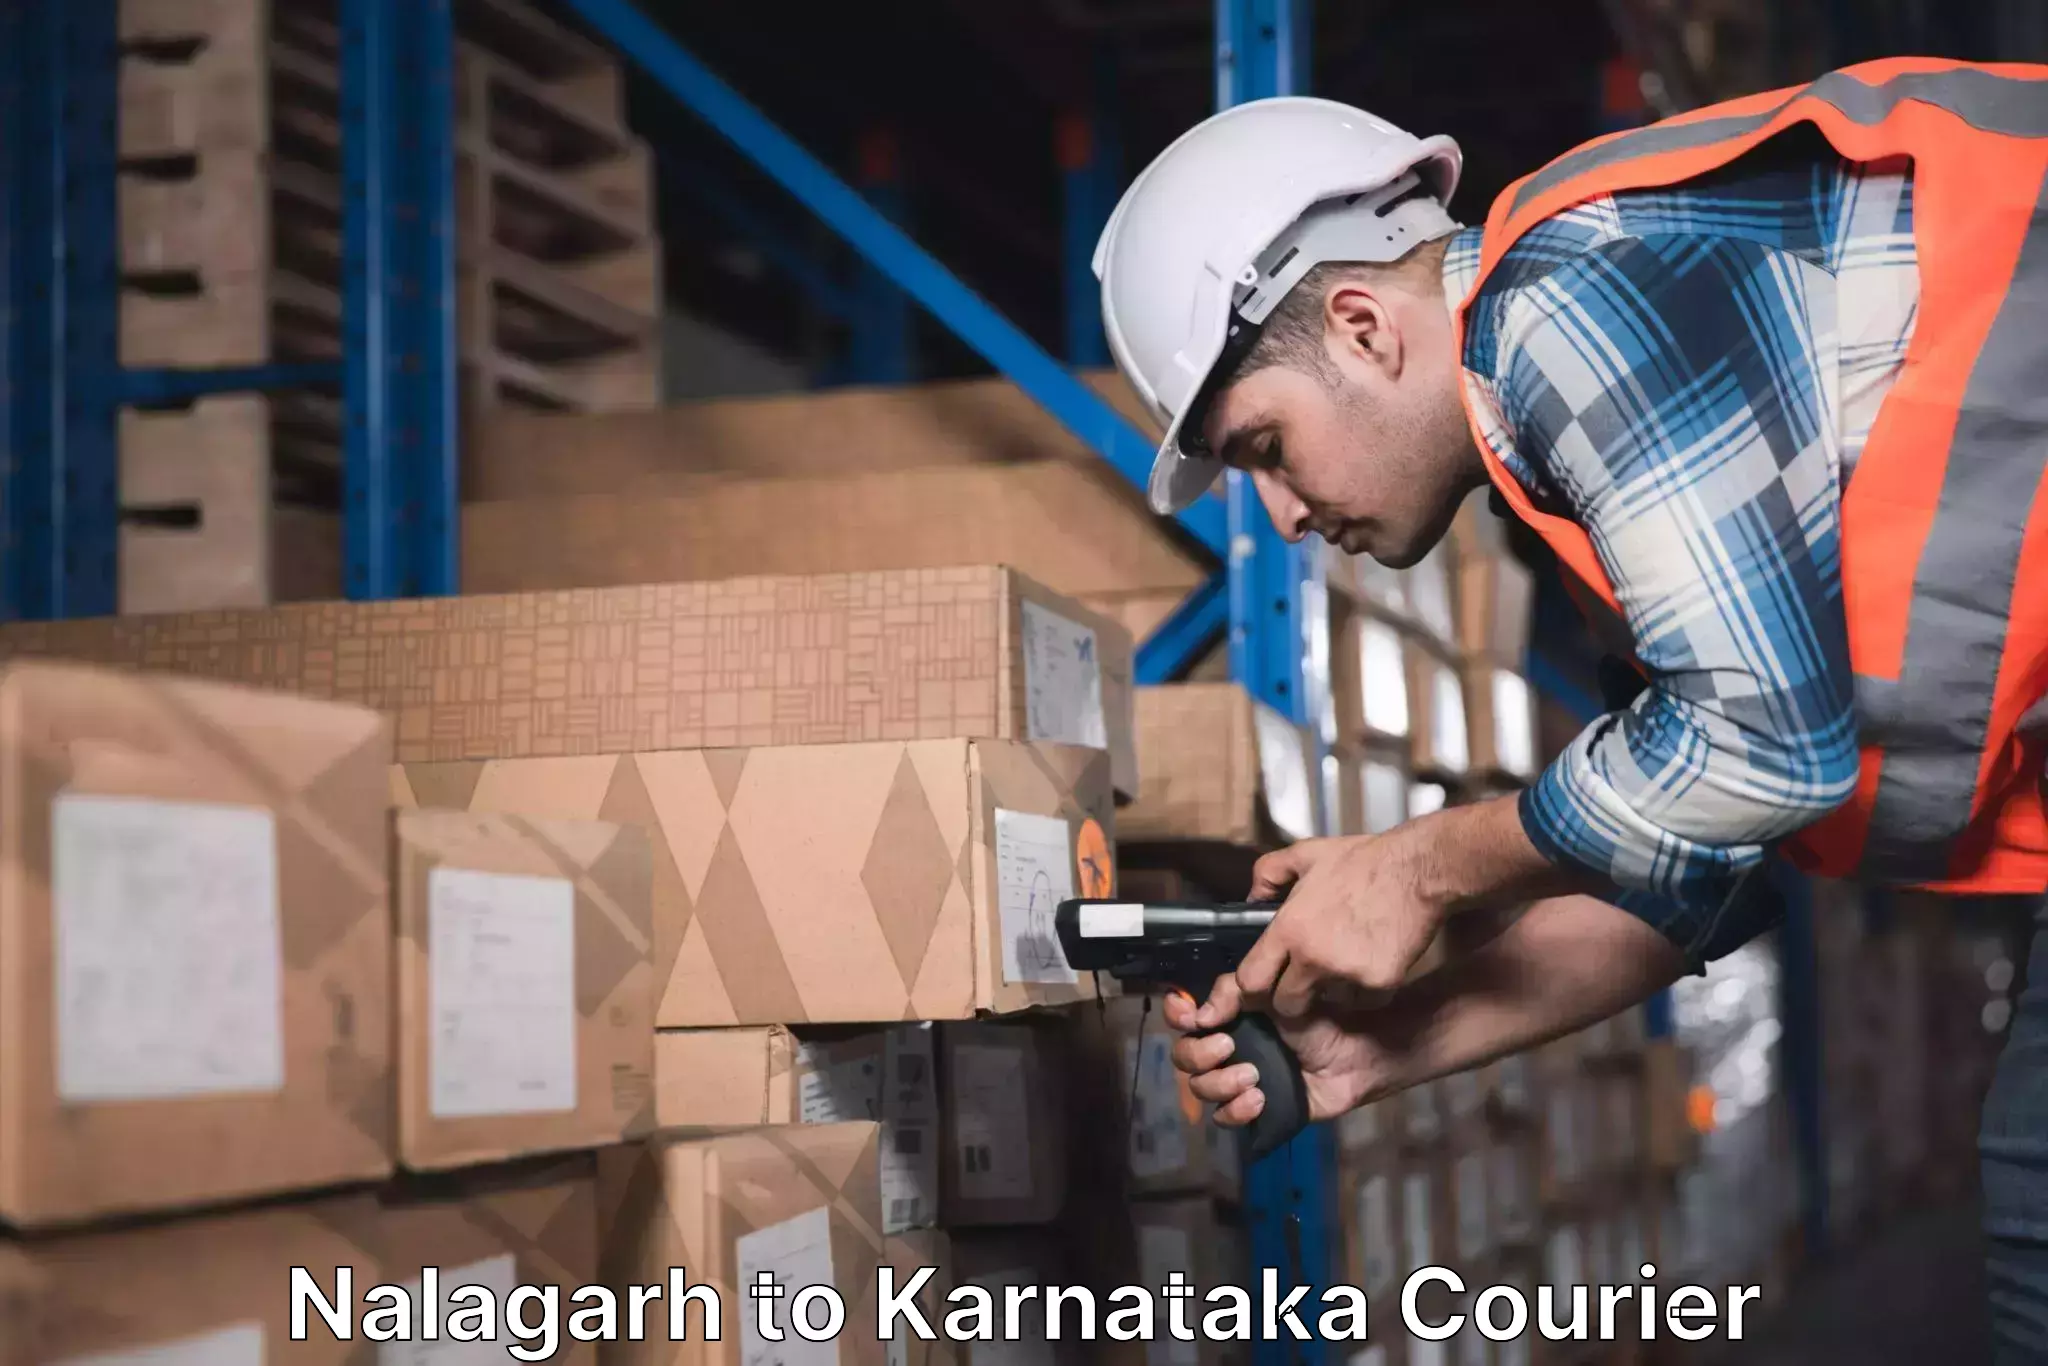 Tech-enabled shipping Nalagarh to IIT Dharwad